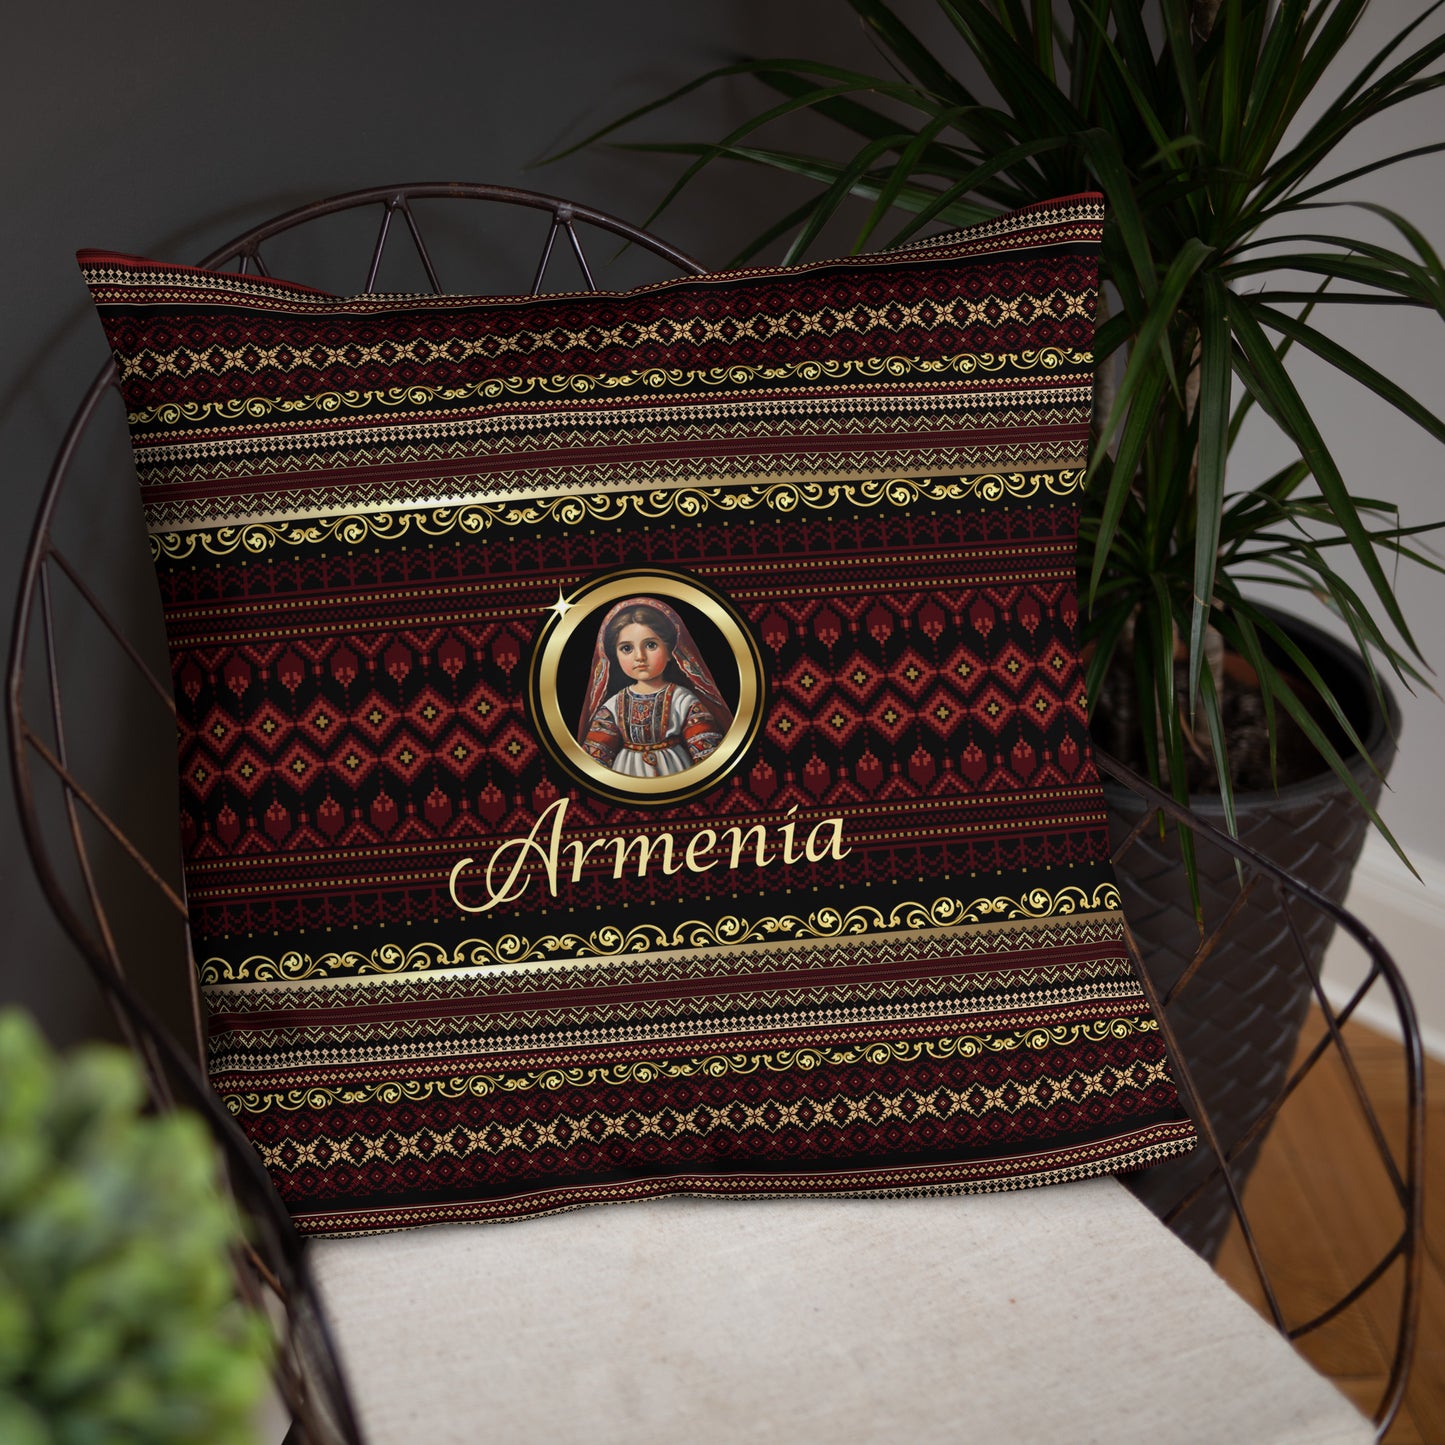 Armenia Travel Gift | Armenia Vacation Gift | Armenia Travel Souvenir | Armenia Vacation Memento | Armenia Home Décor | Keepsake Souvenir Gift | Travel Vacation Gift | World Travel Gift Pillow